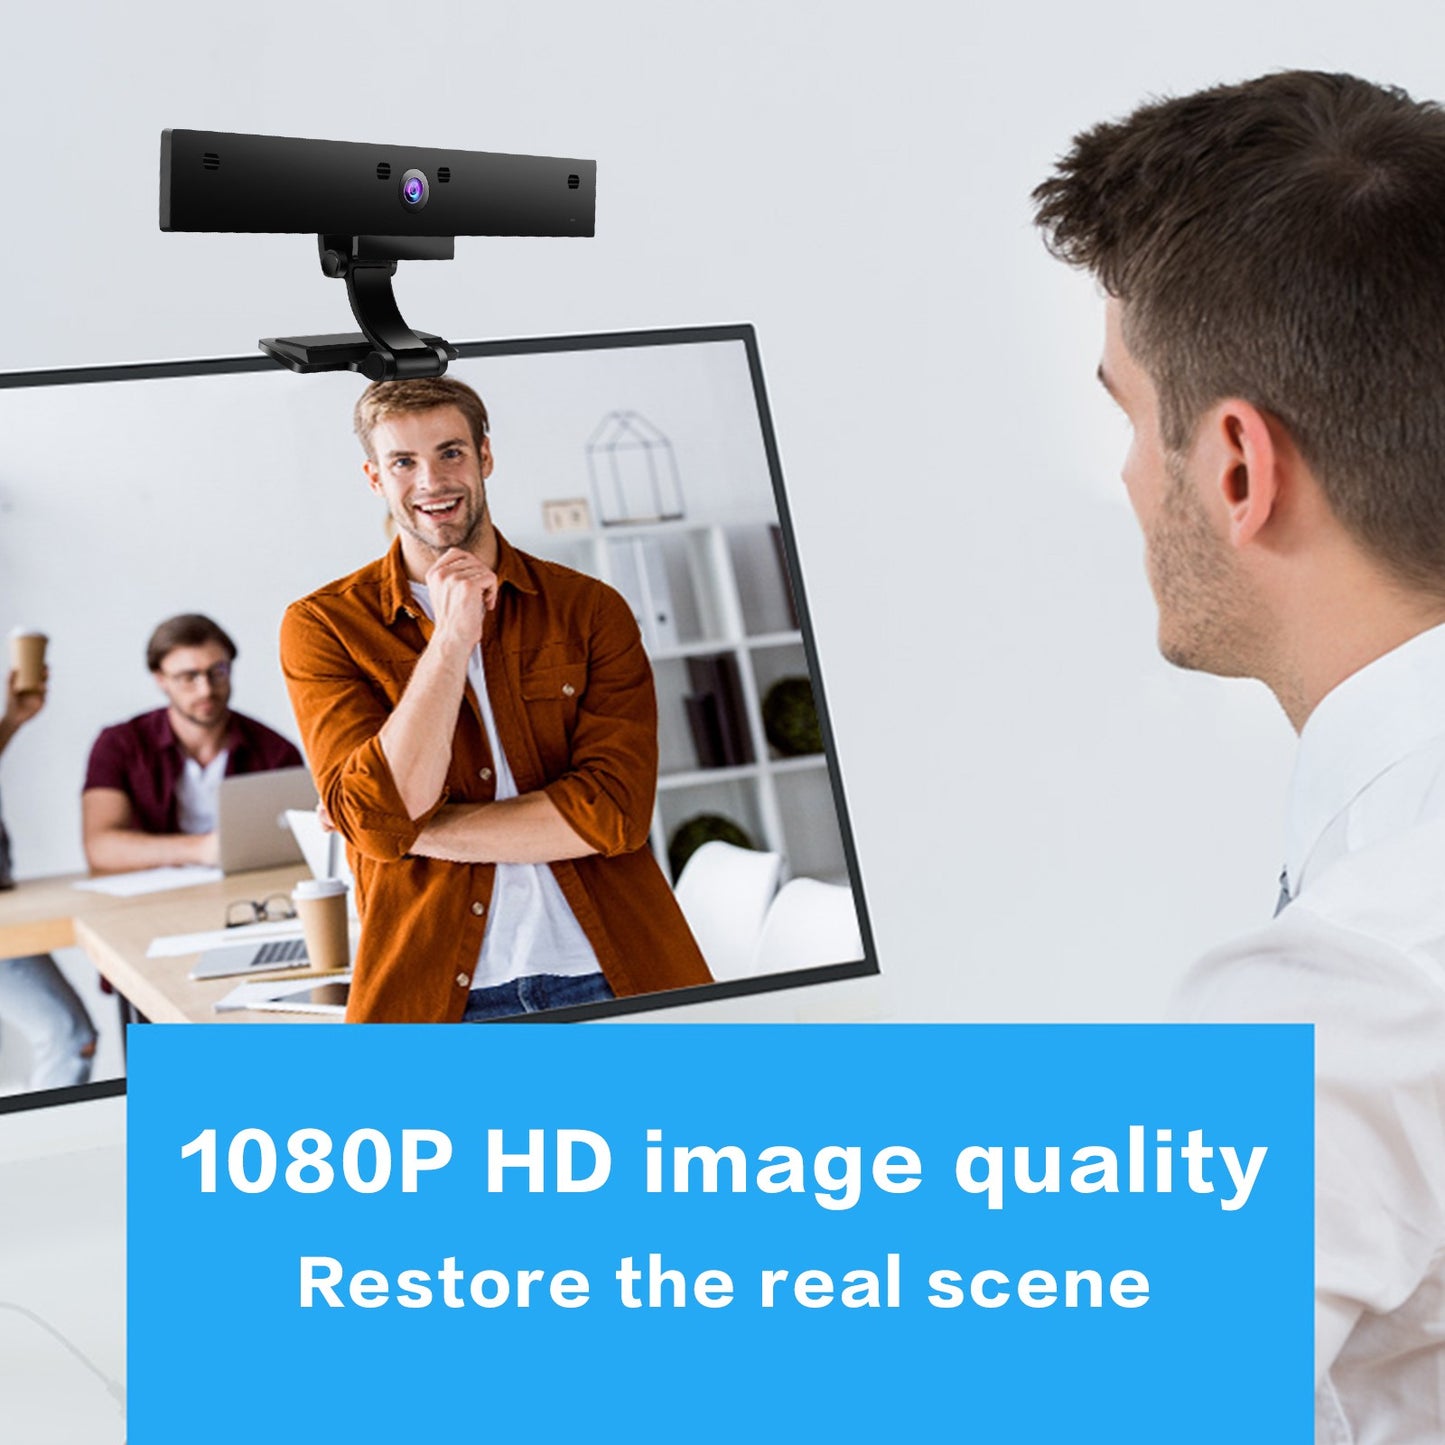 1080P HD Web Camera USB2.0 Webcam with Microphone LED for PC Computer Desktop - Black / 104